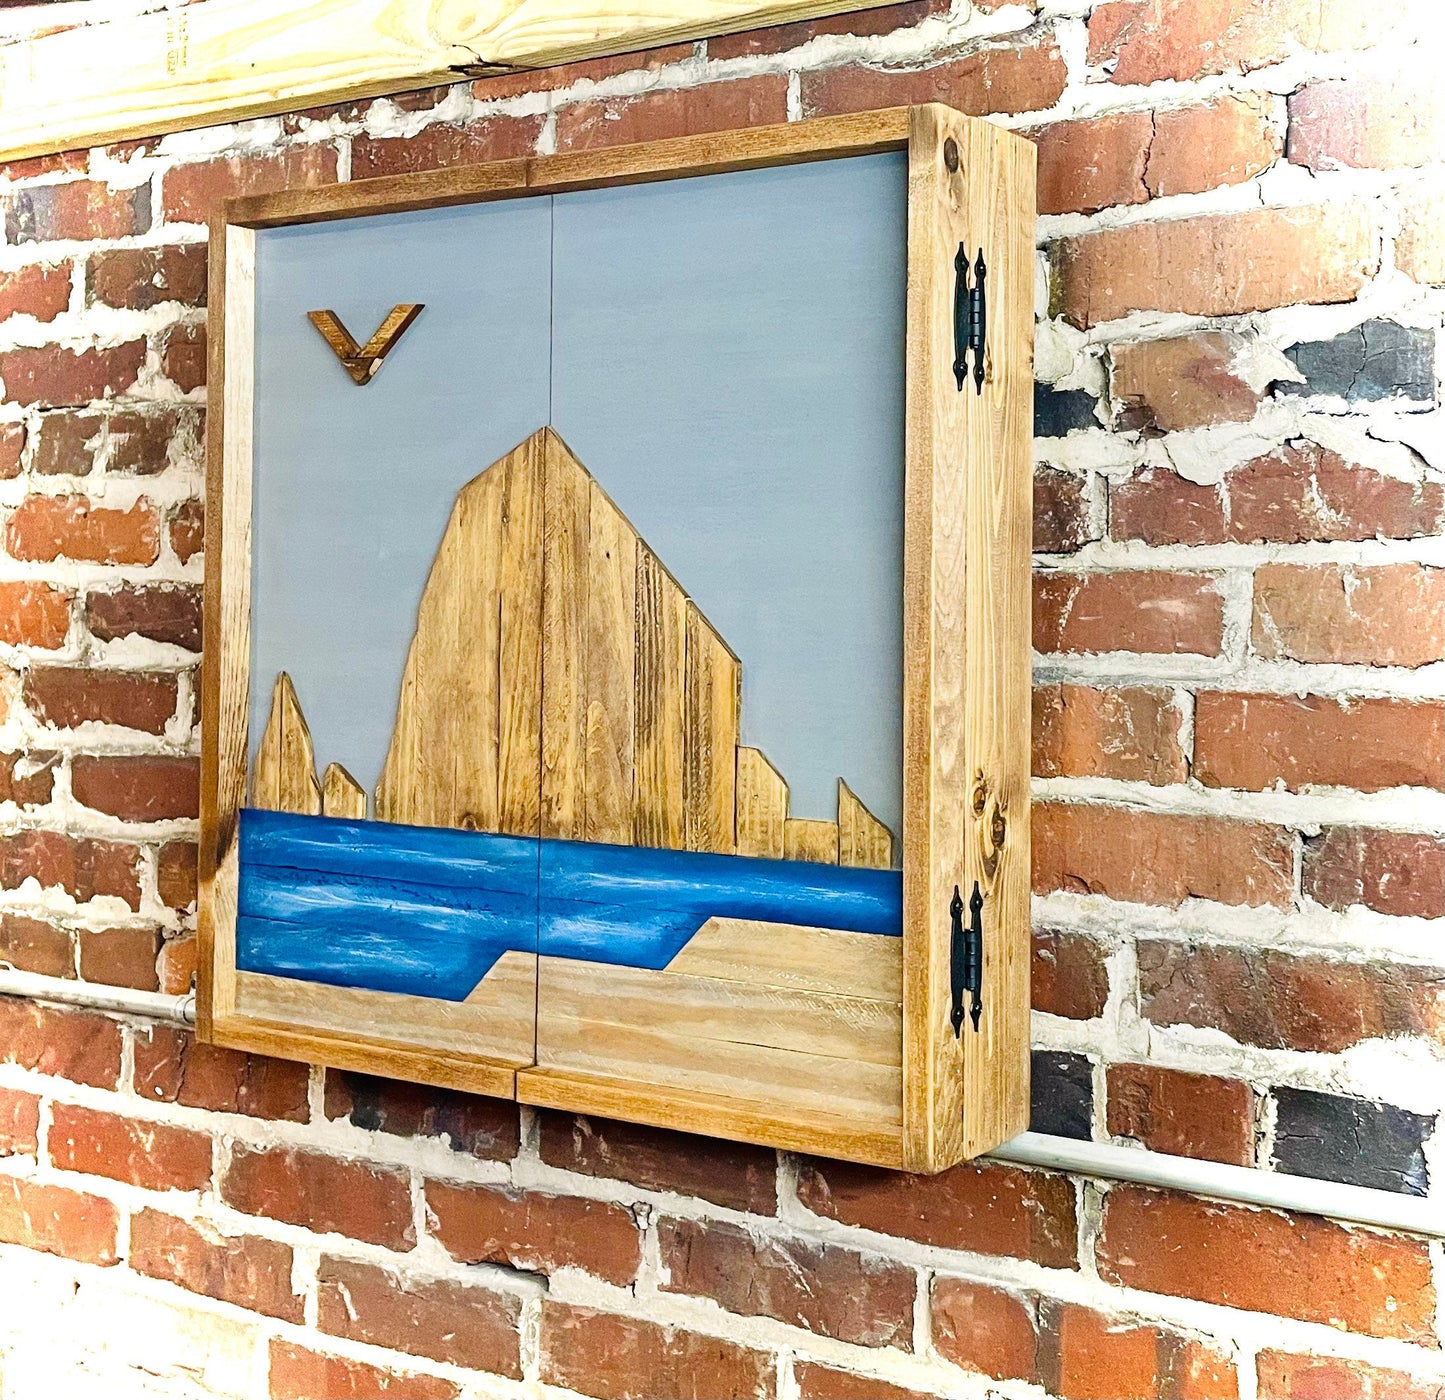 Rustic Dartboard Cabinet 24”x24” - Oregon Scene -Haystack Rock Artwork- Front-Rustic Cabinet - Gameroom Art - Wall Decor